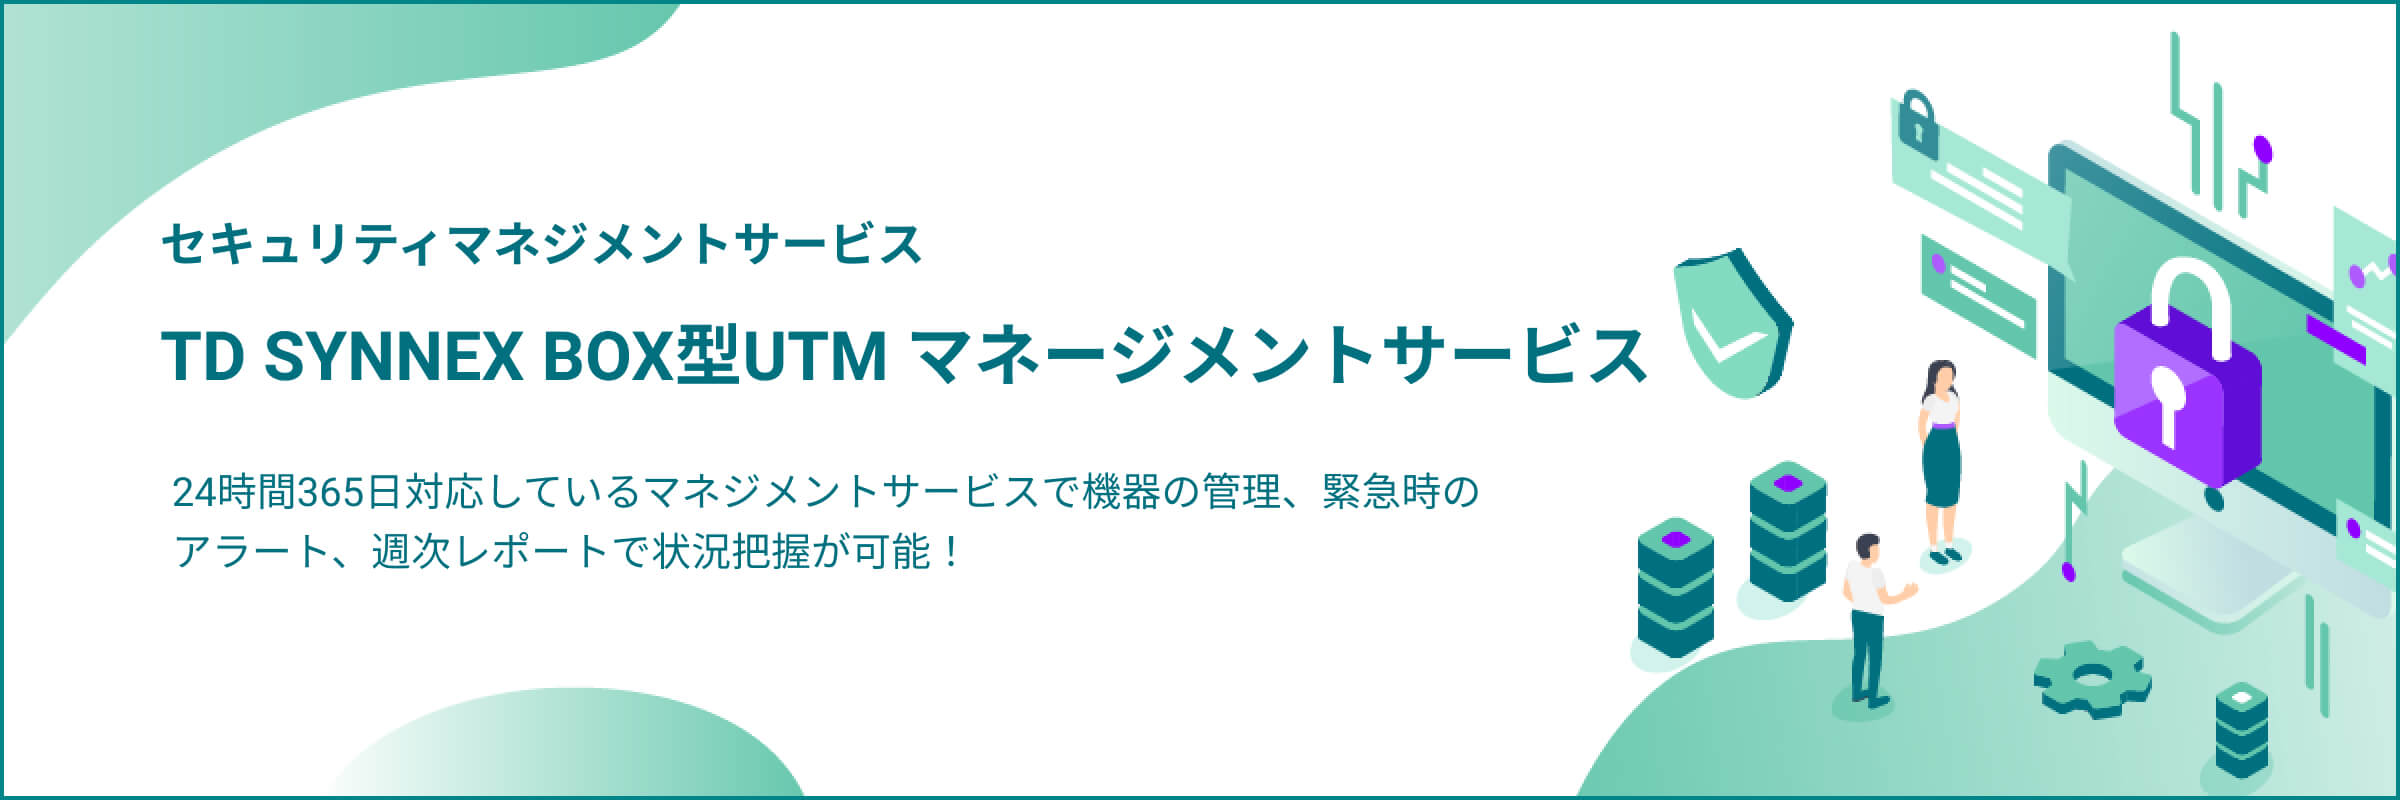 TD SYNNEX BOX型UTM マネージメントサービス